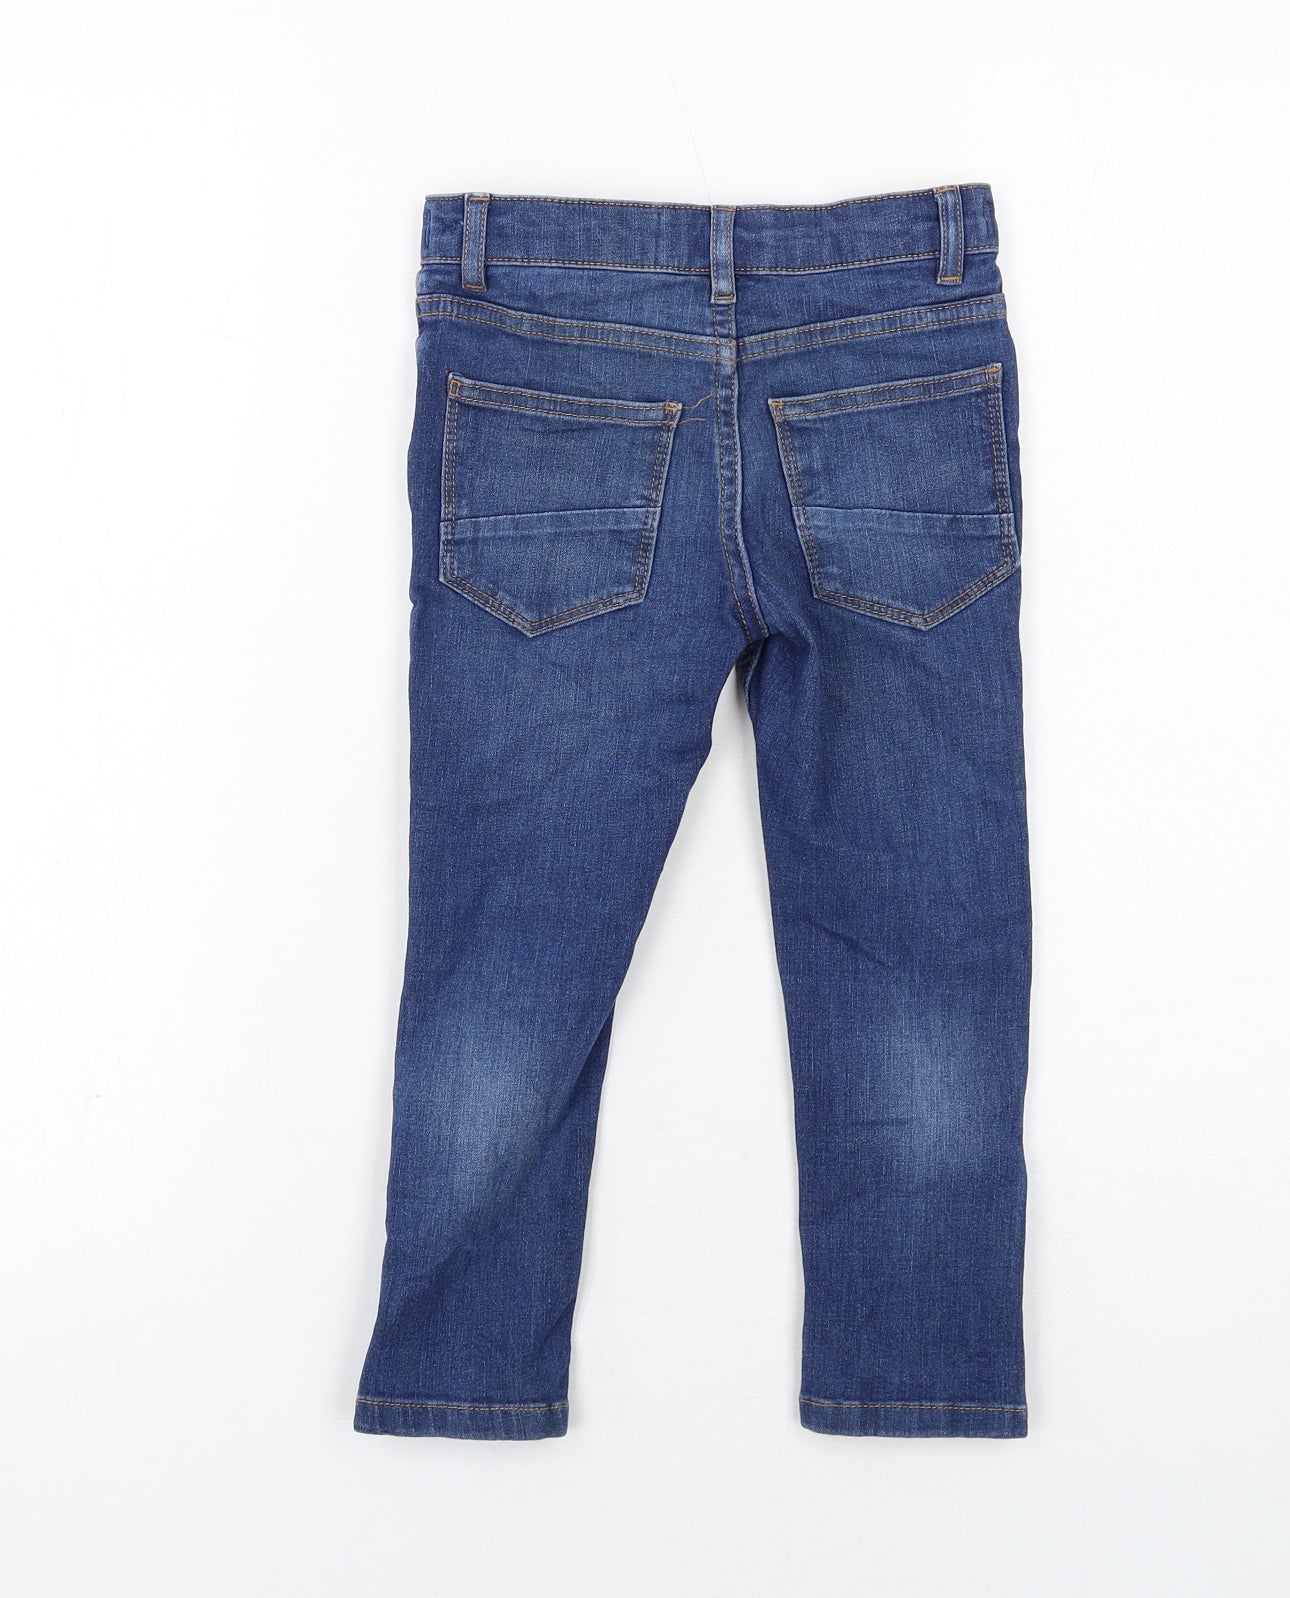 NEXT Boys Blue Cotton Skinny Jeans Size 12 Years Regular Zip